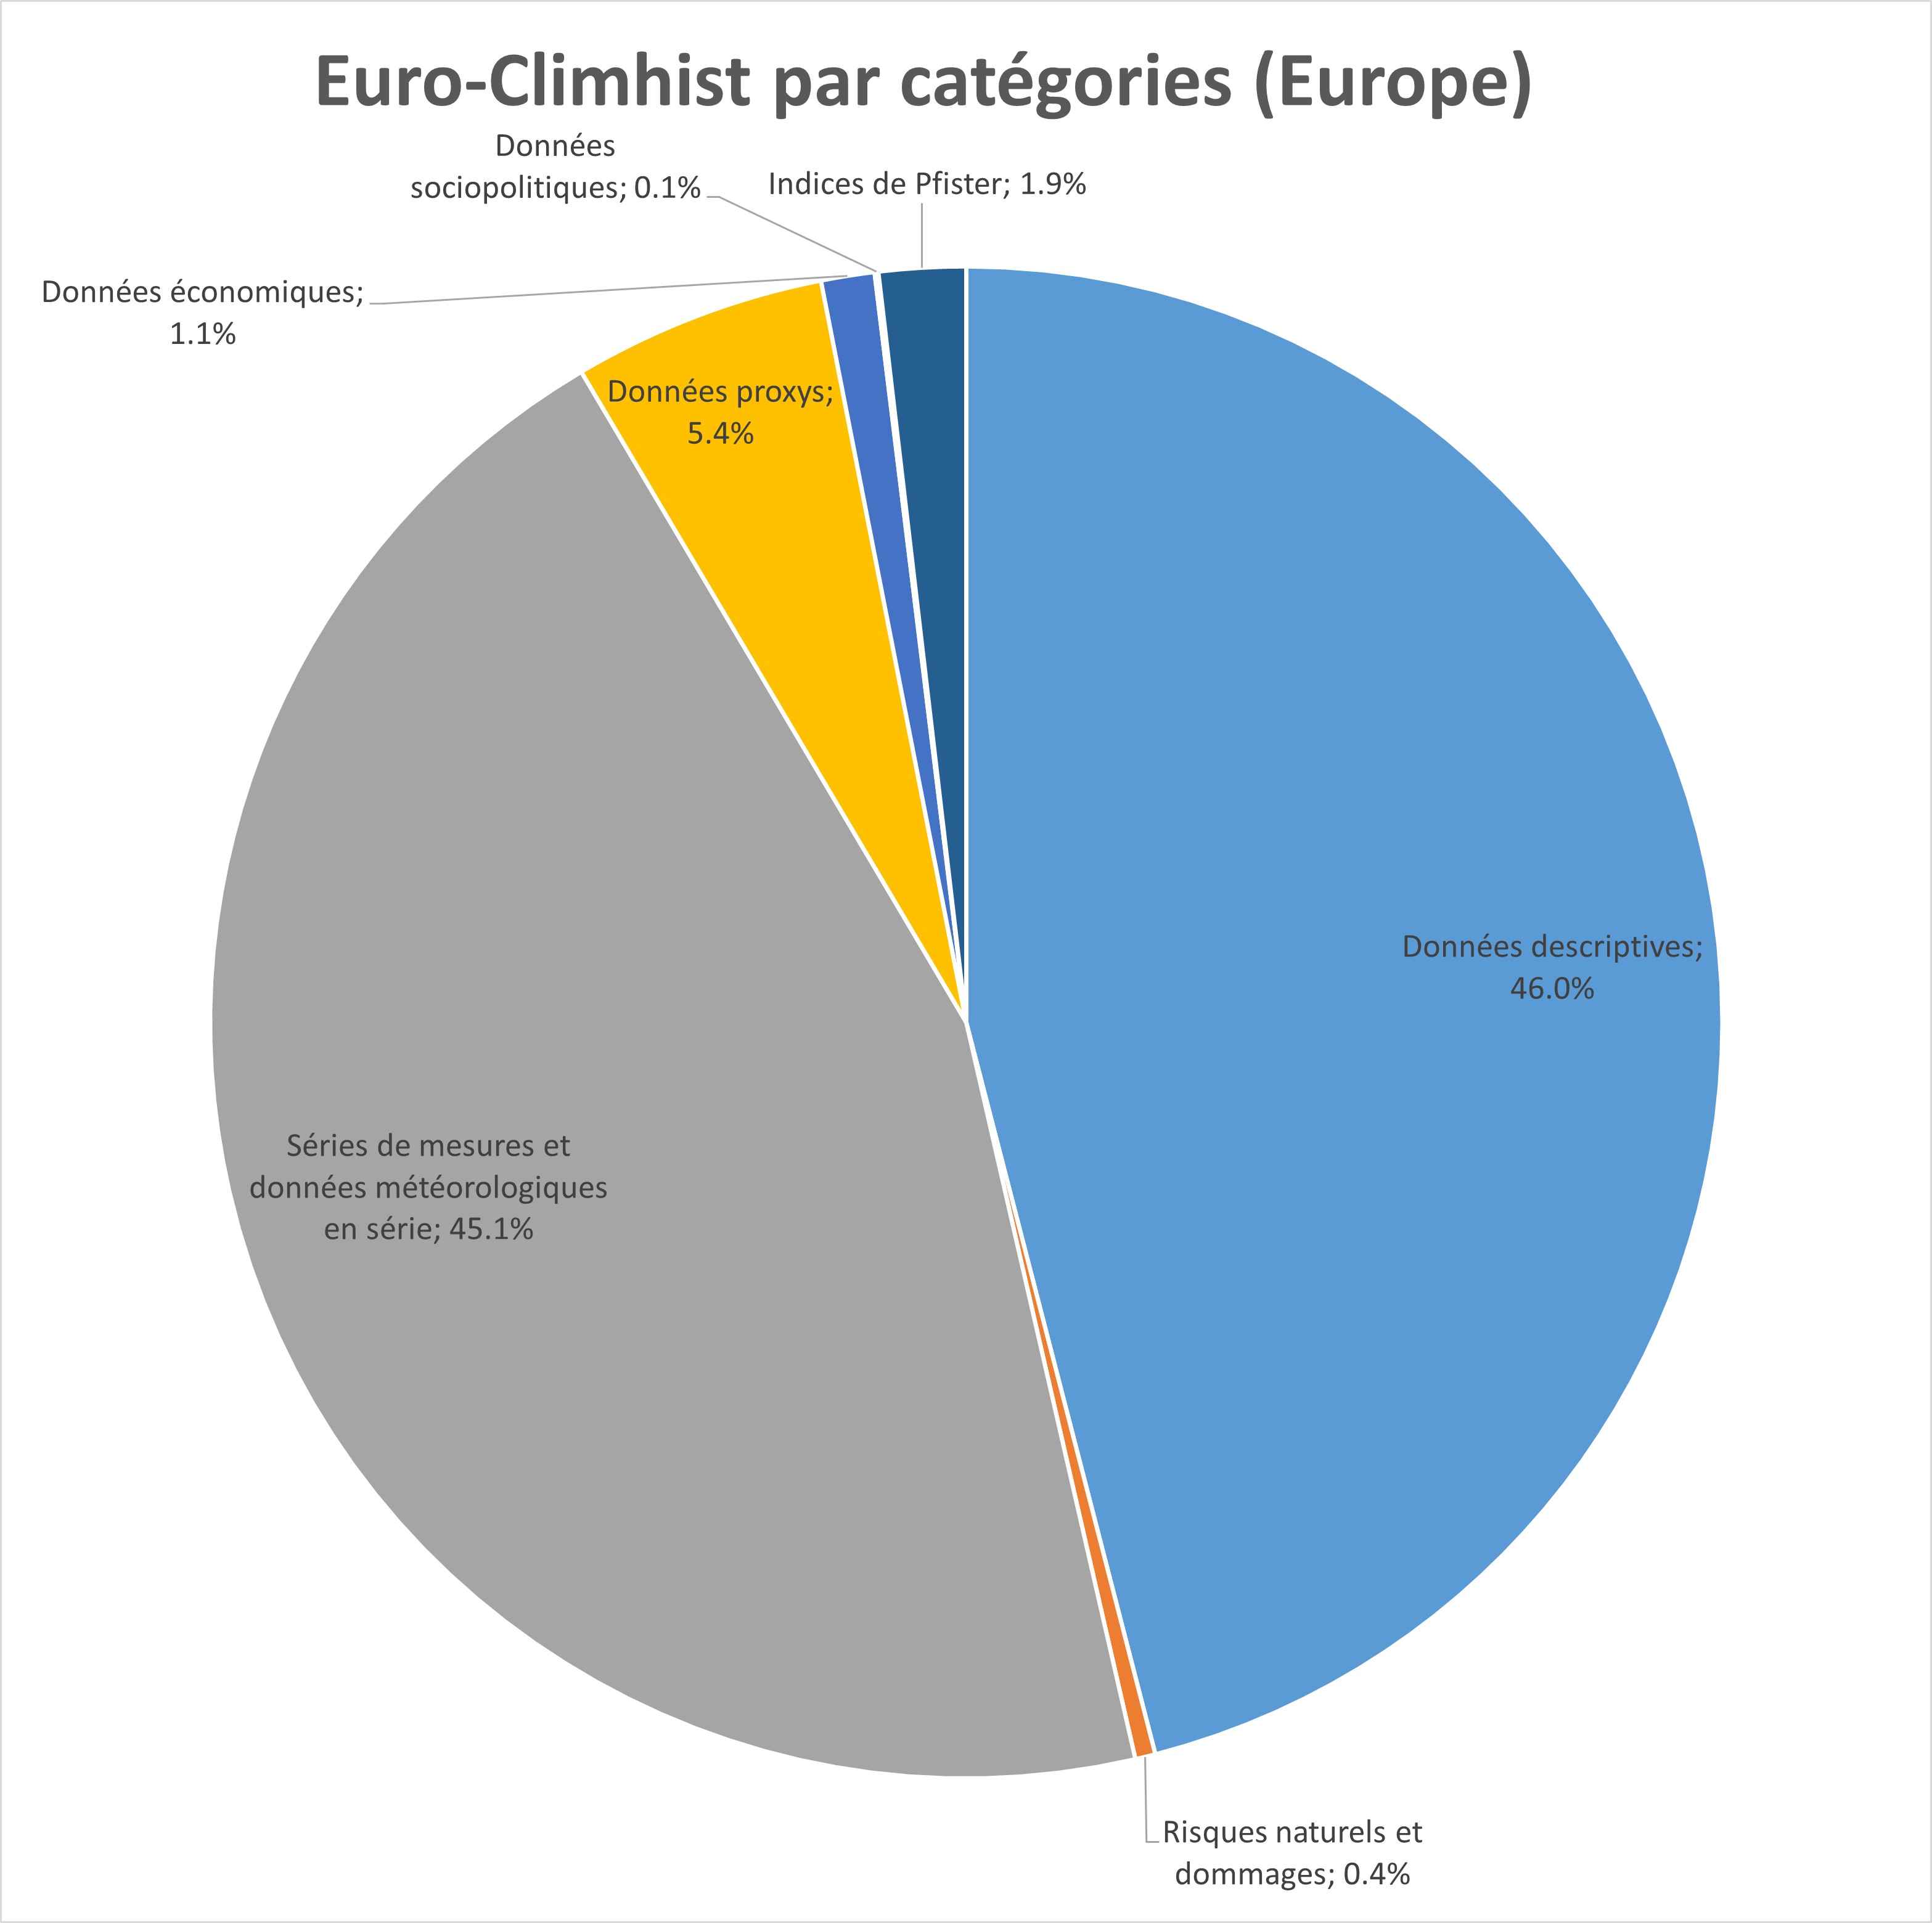 Euro-Climhist nach Kategorien (Europa)